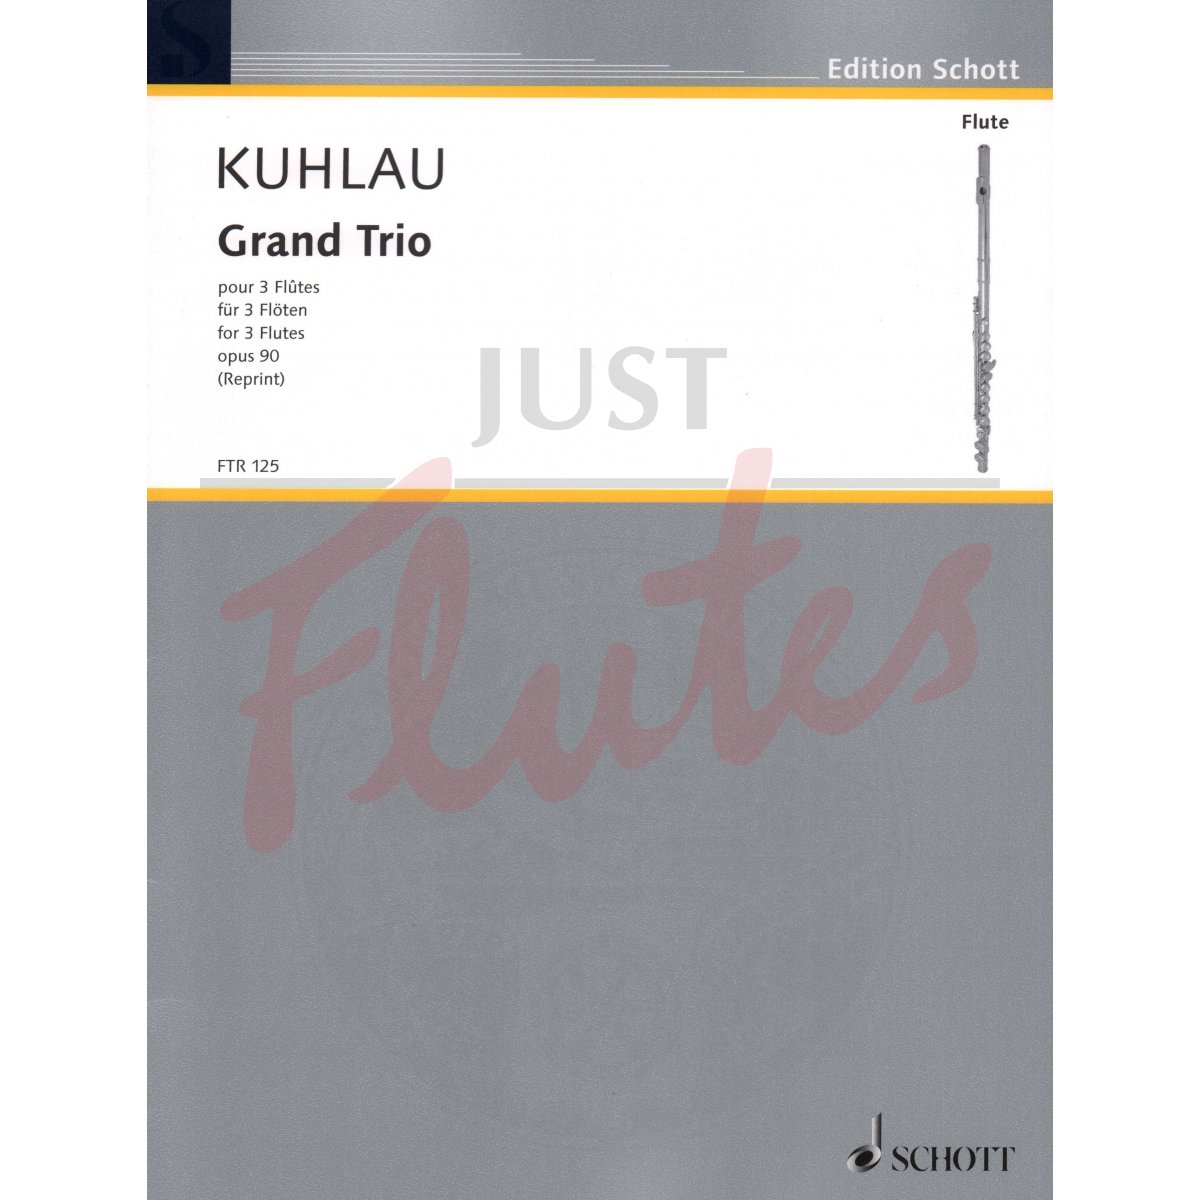 Grand Trio for Three Flutes